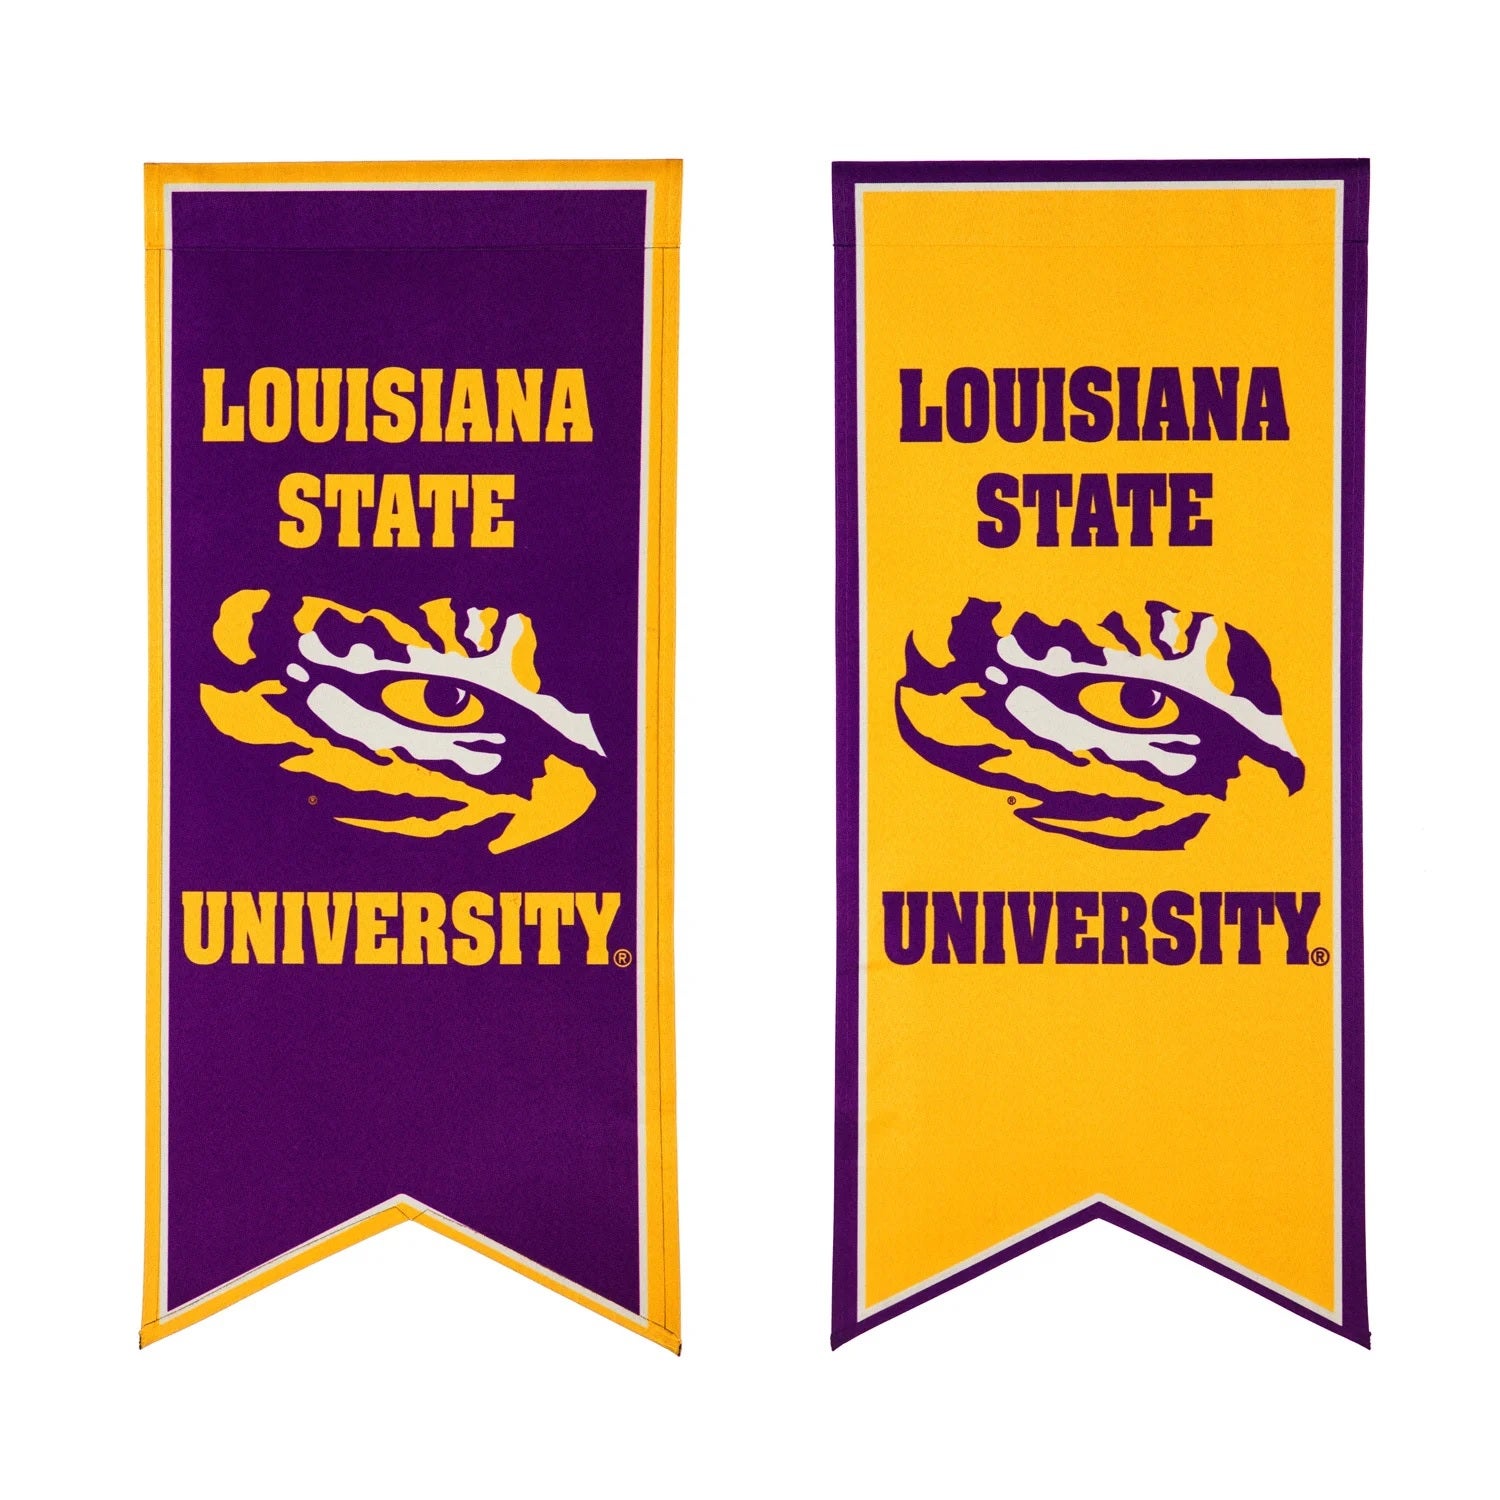 Louisiana State University, Flag Banner